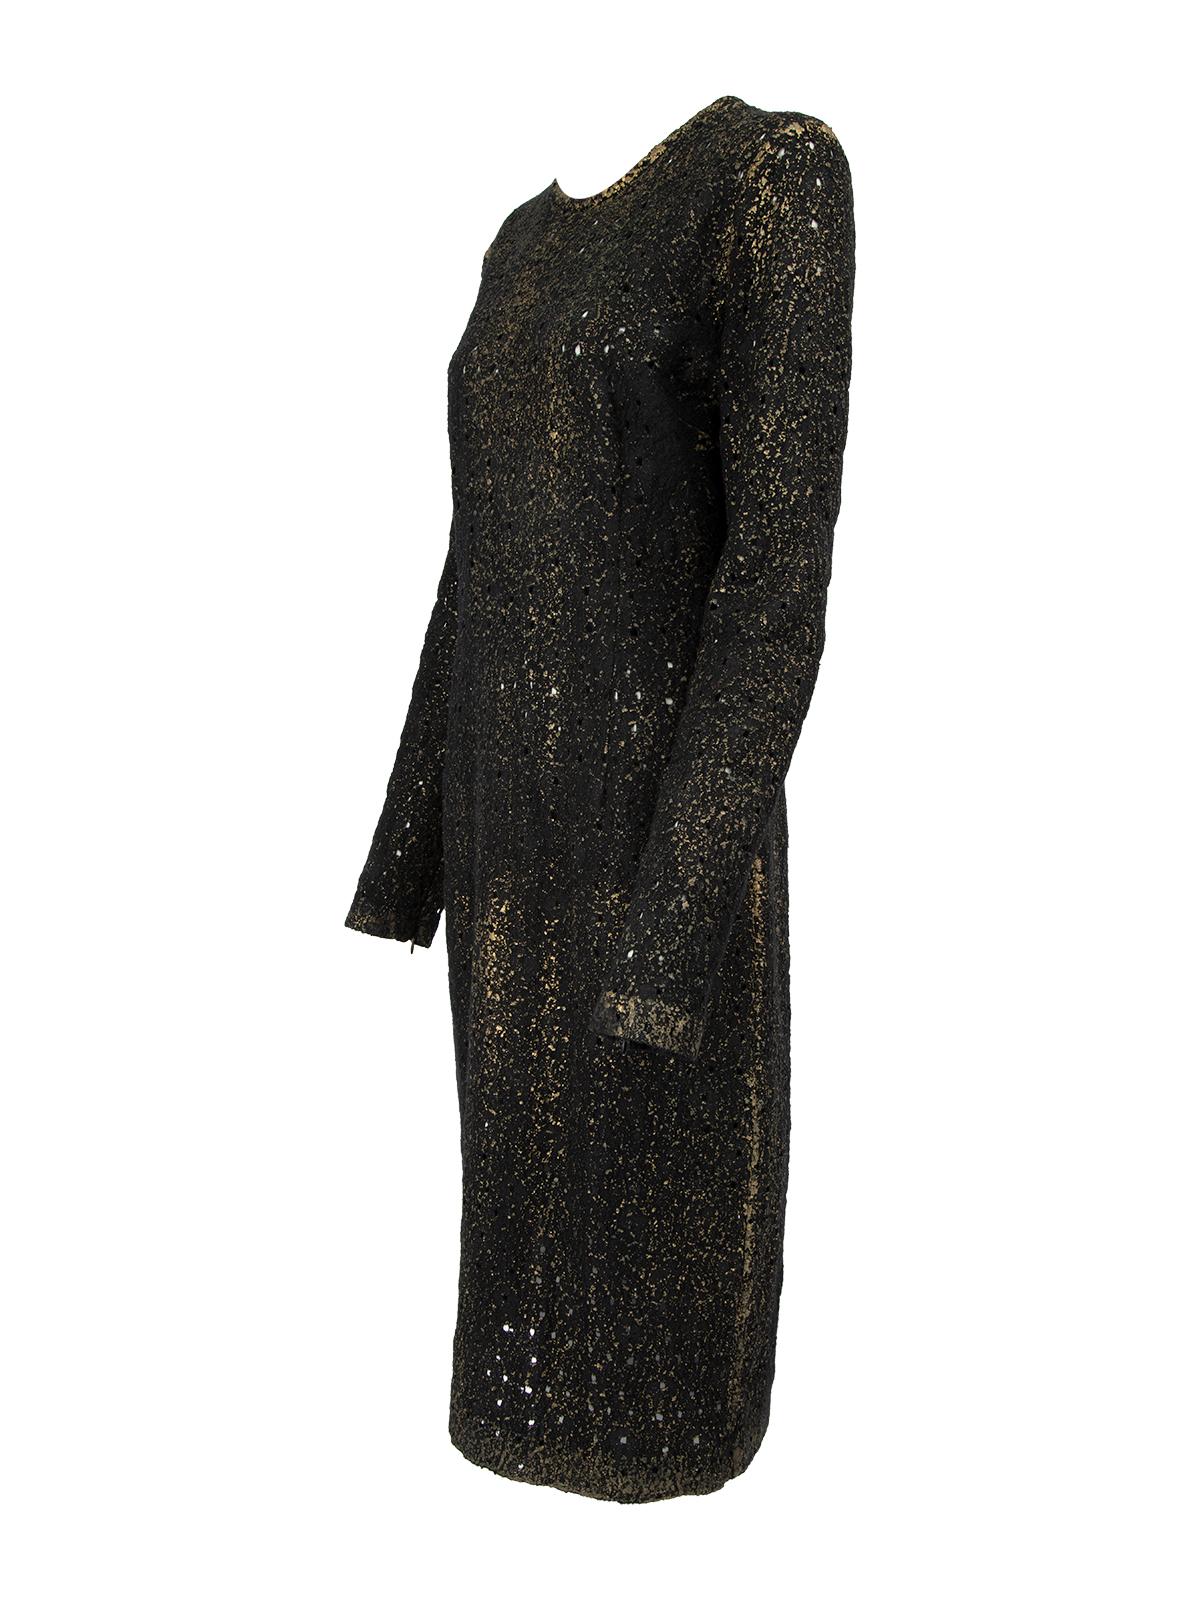 Pre-Loved Bottega Veneta Women's Black and Gold Perforated Dress For Sale 1